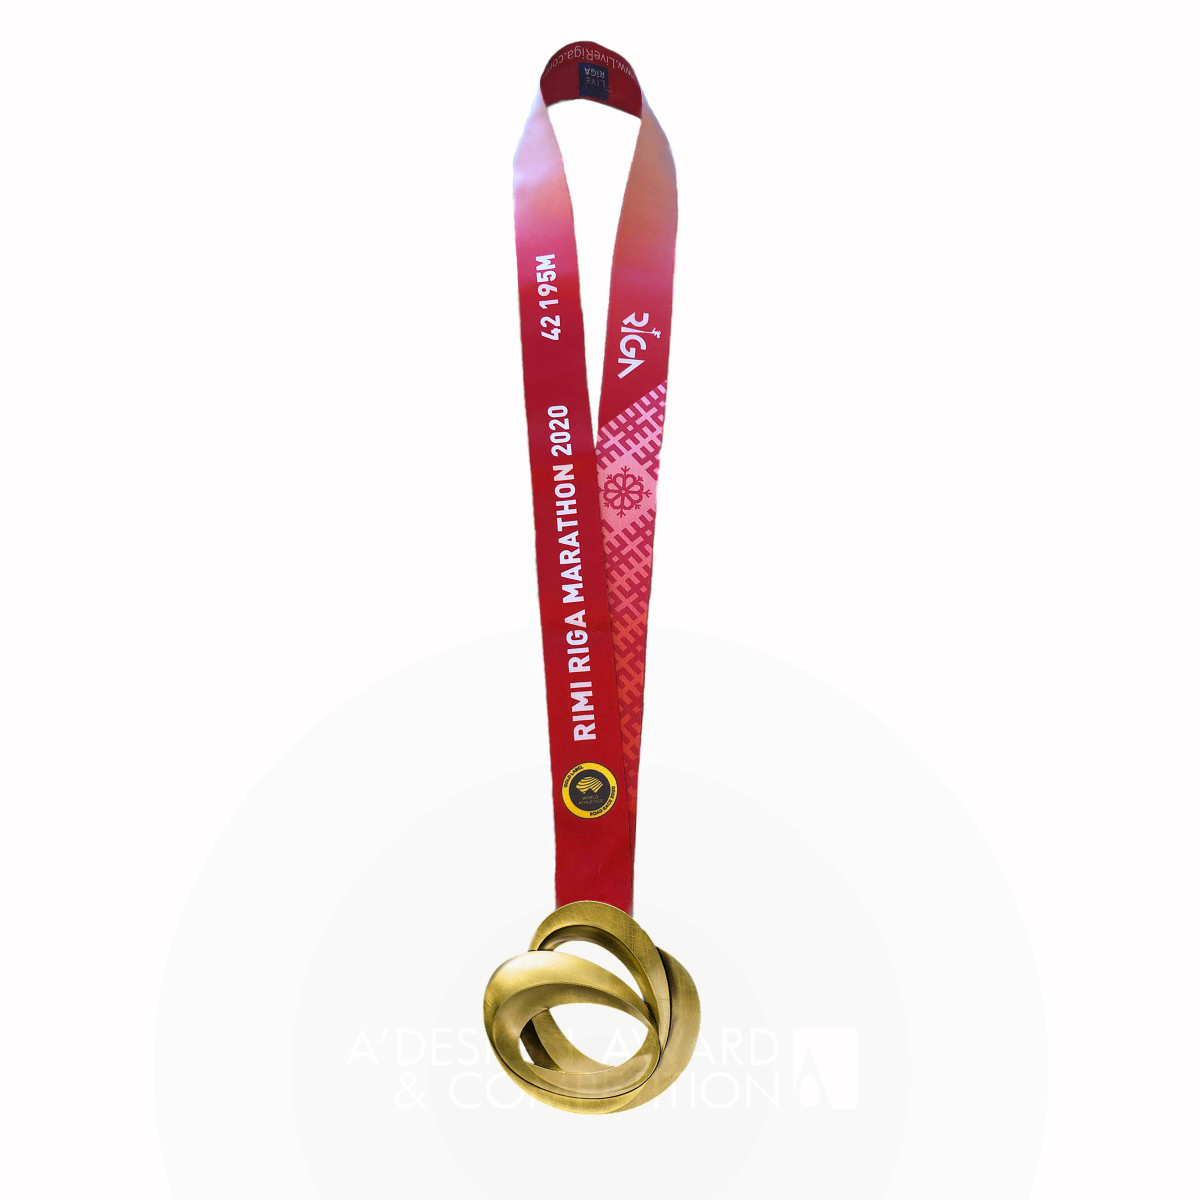 Riga marathon 2020 Runner  039 s Medals by Junichi Kawanishi